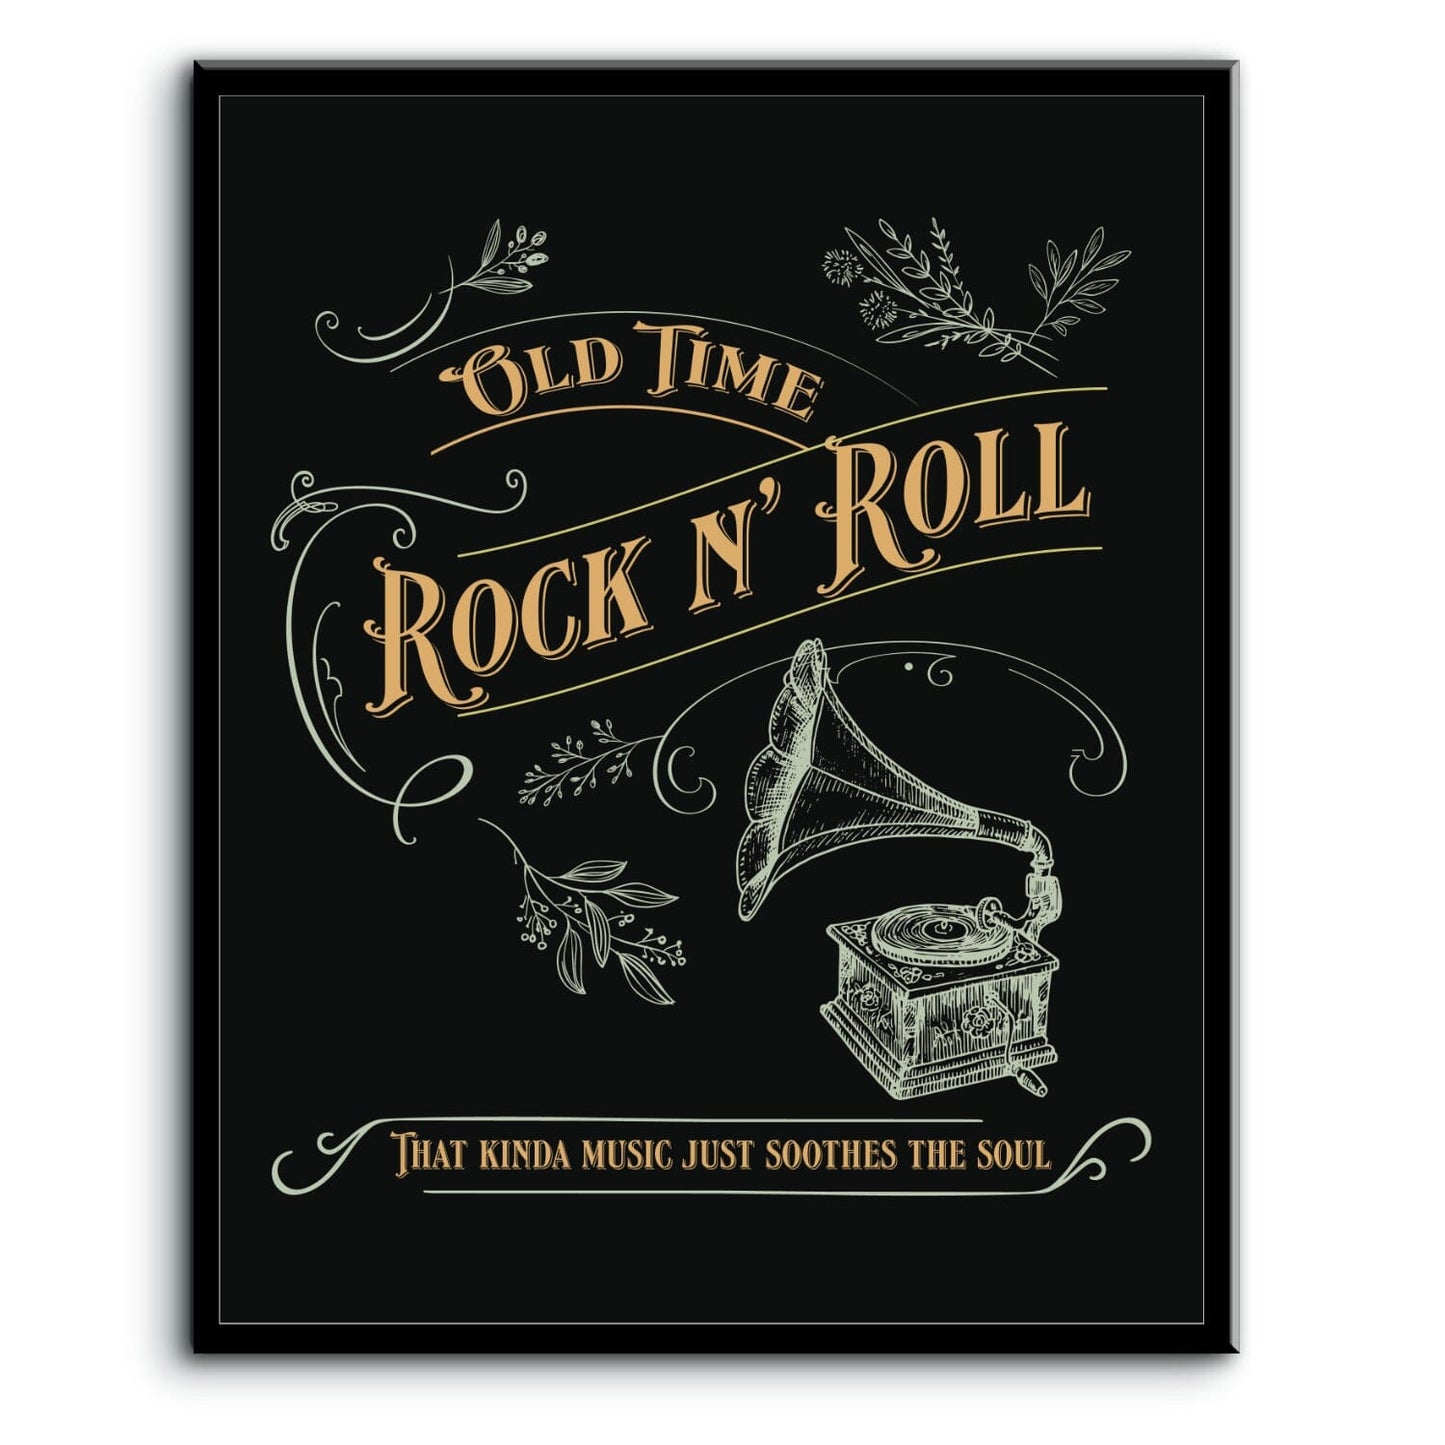 Old Time Rock N' Roll by Bob Seger - Song Lyrics Art Print Song Lyrics Art Song Lyrics Art 8x10 Plaque Mount 